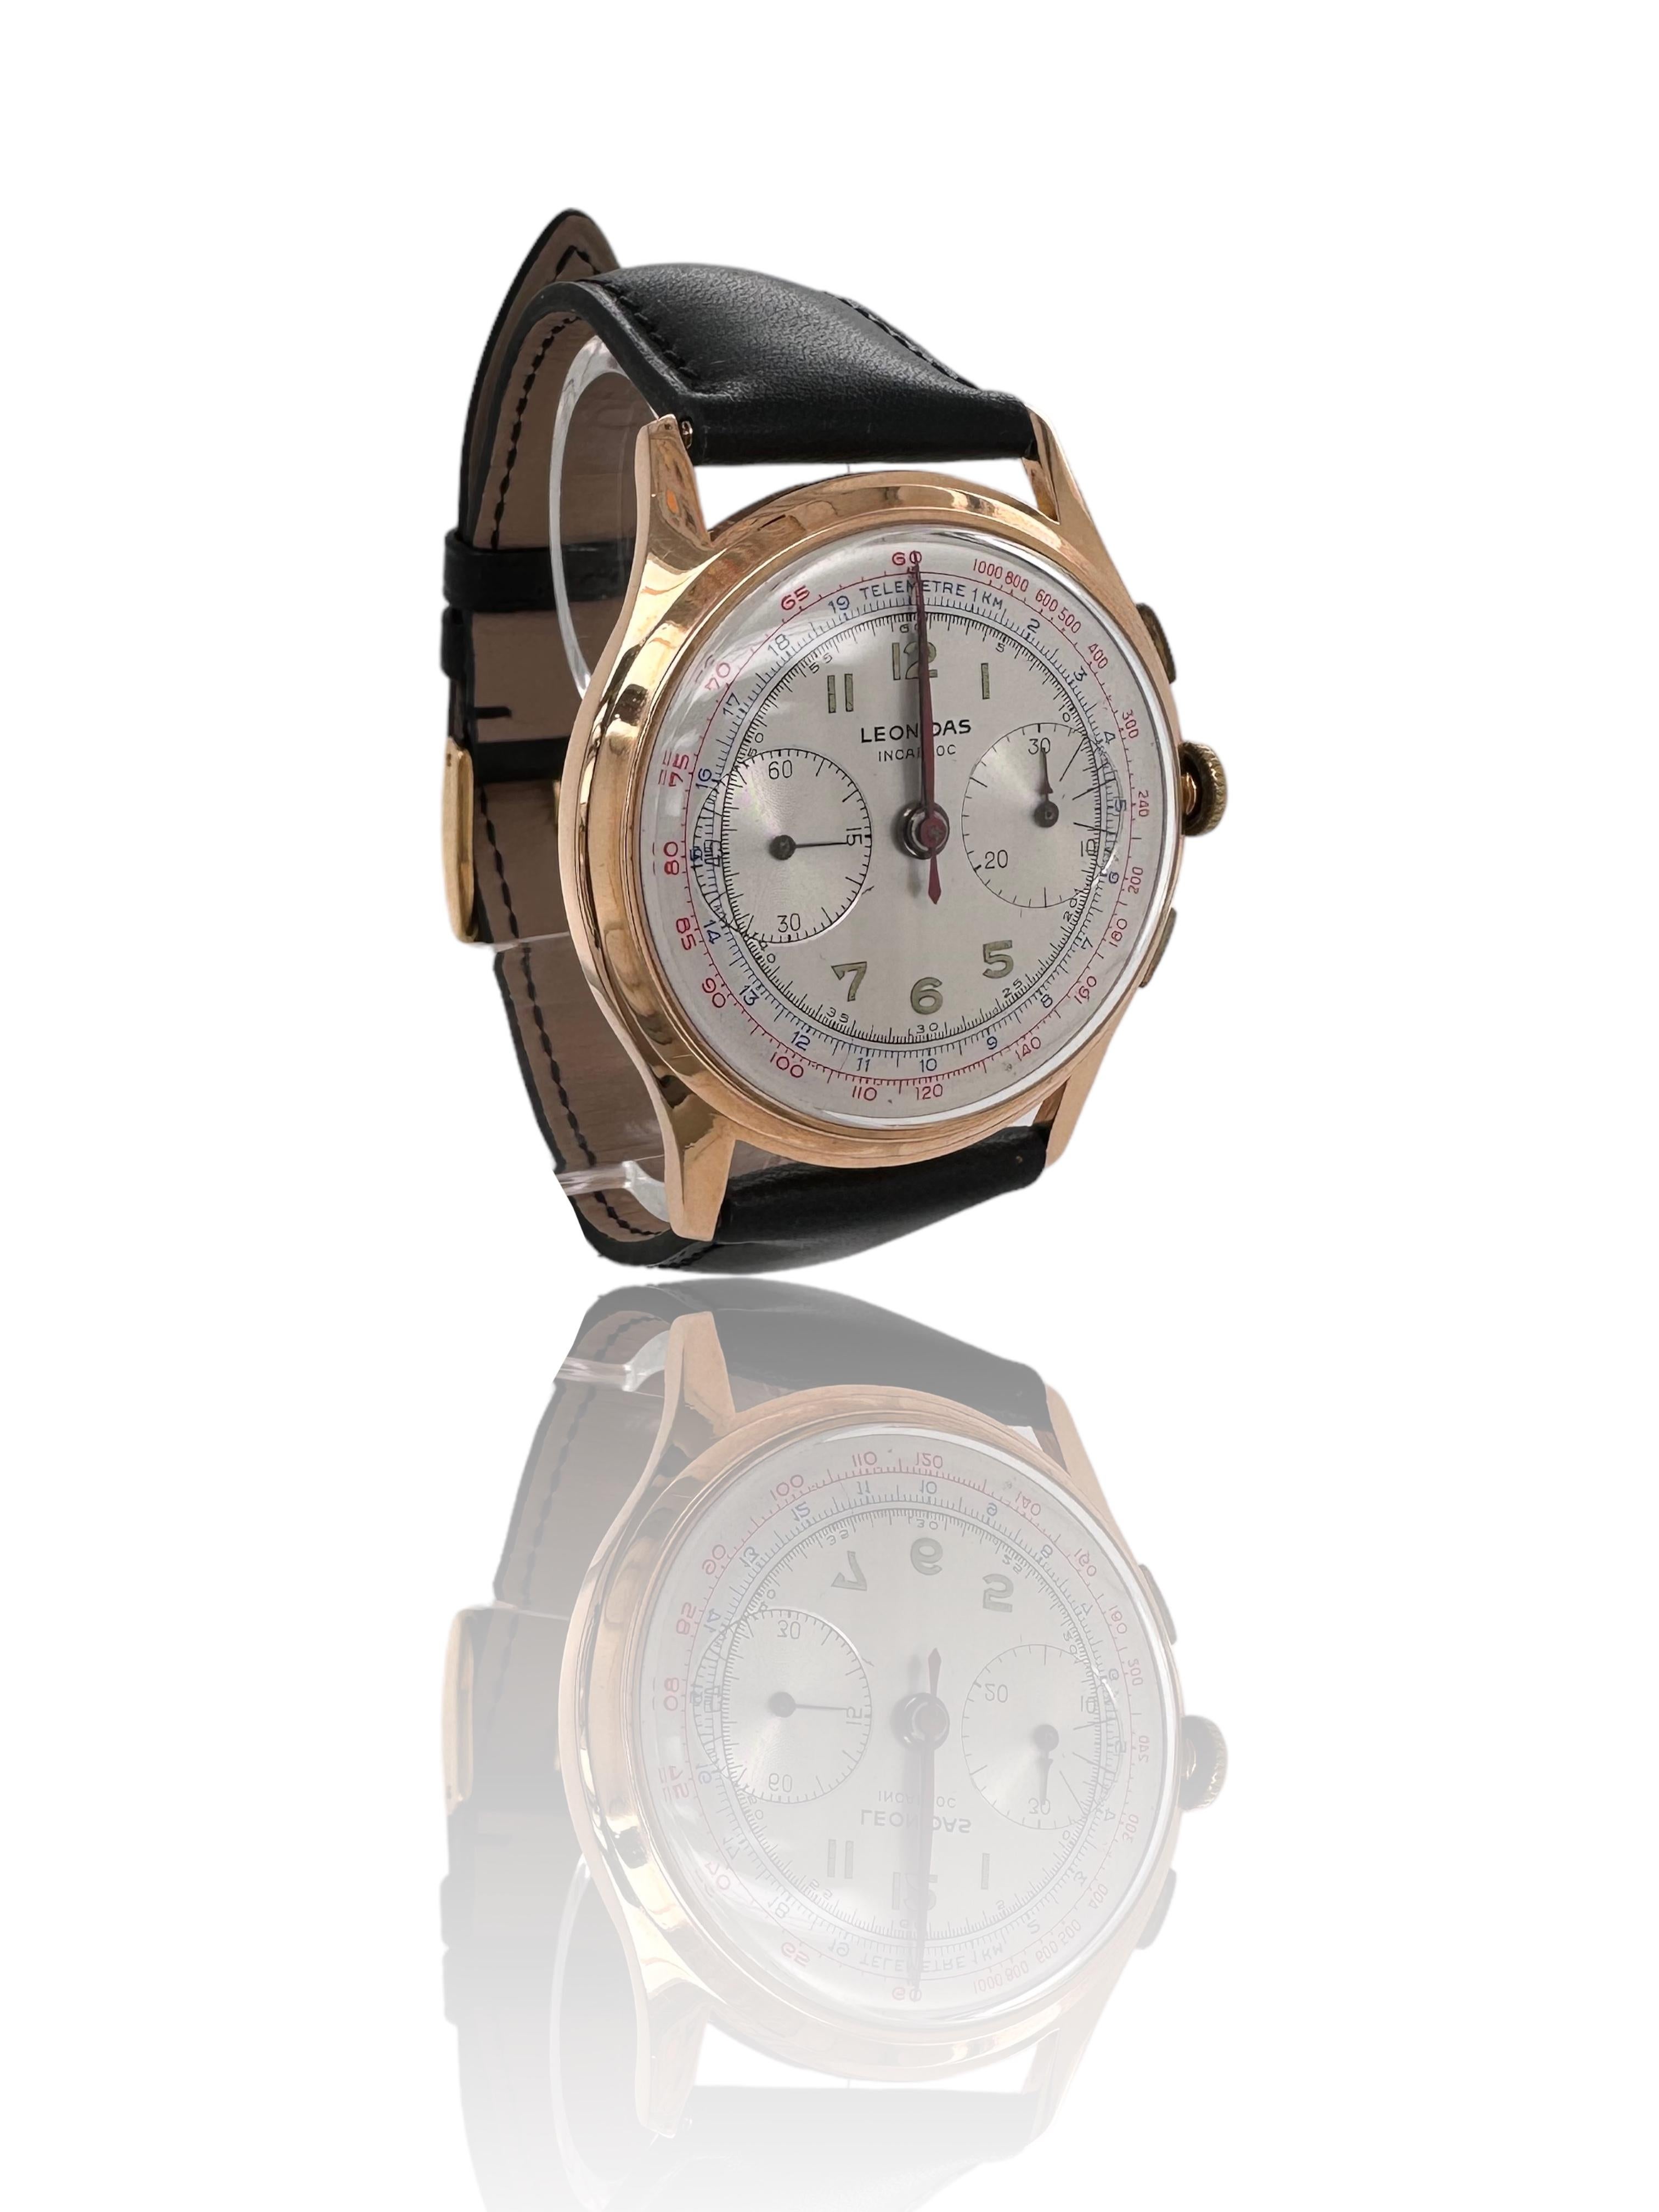 Leonidas Chronograph Wrist Watch 18 Karat Yellow Gold Case In Excellent Condition For Sale In Antwerp, BE